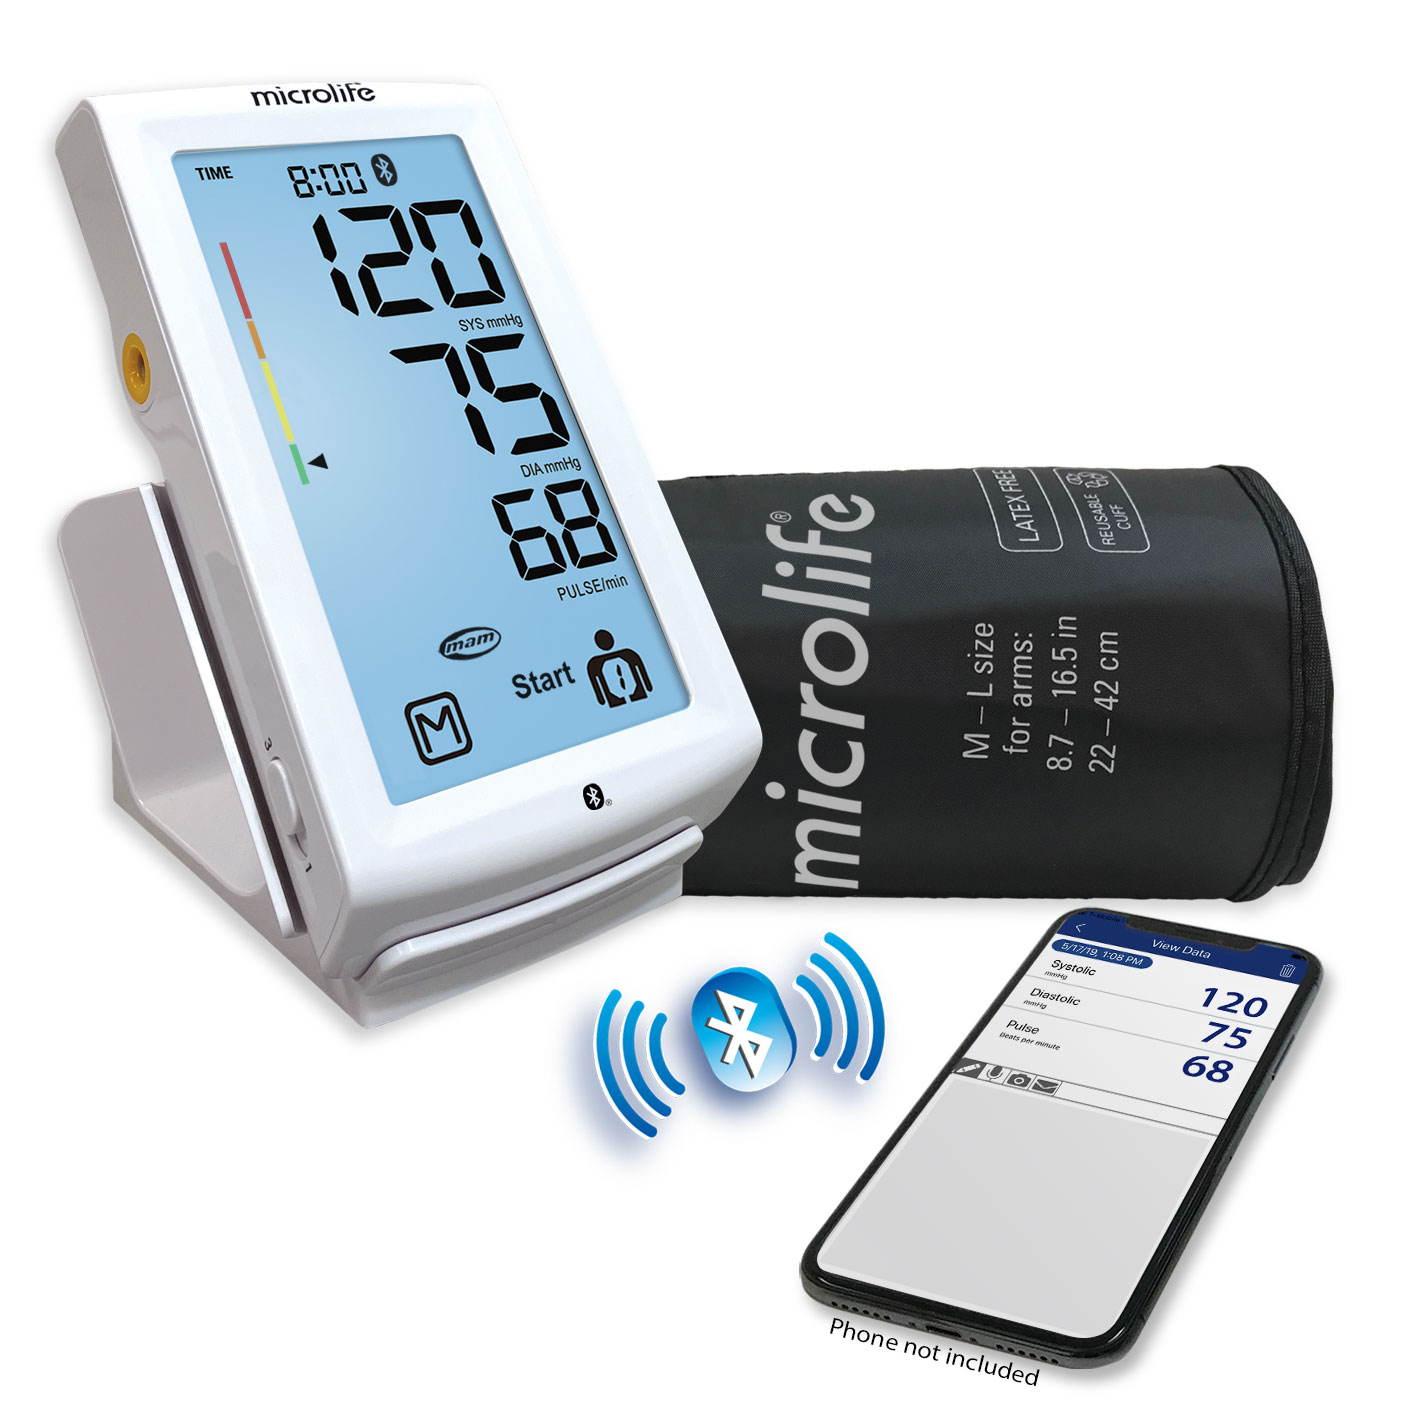 Smart Blood Pressure Monitors